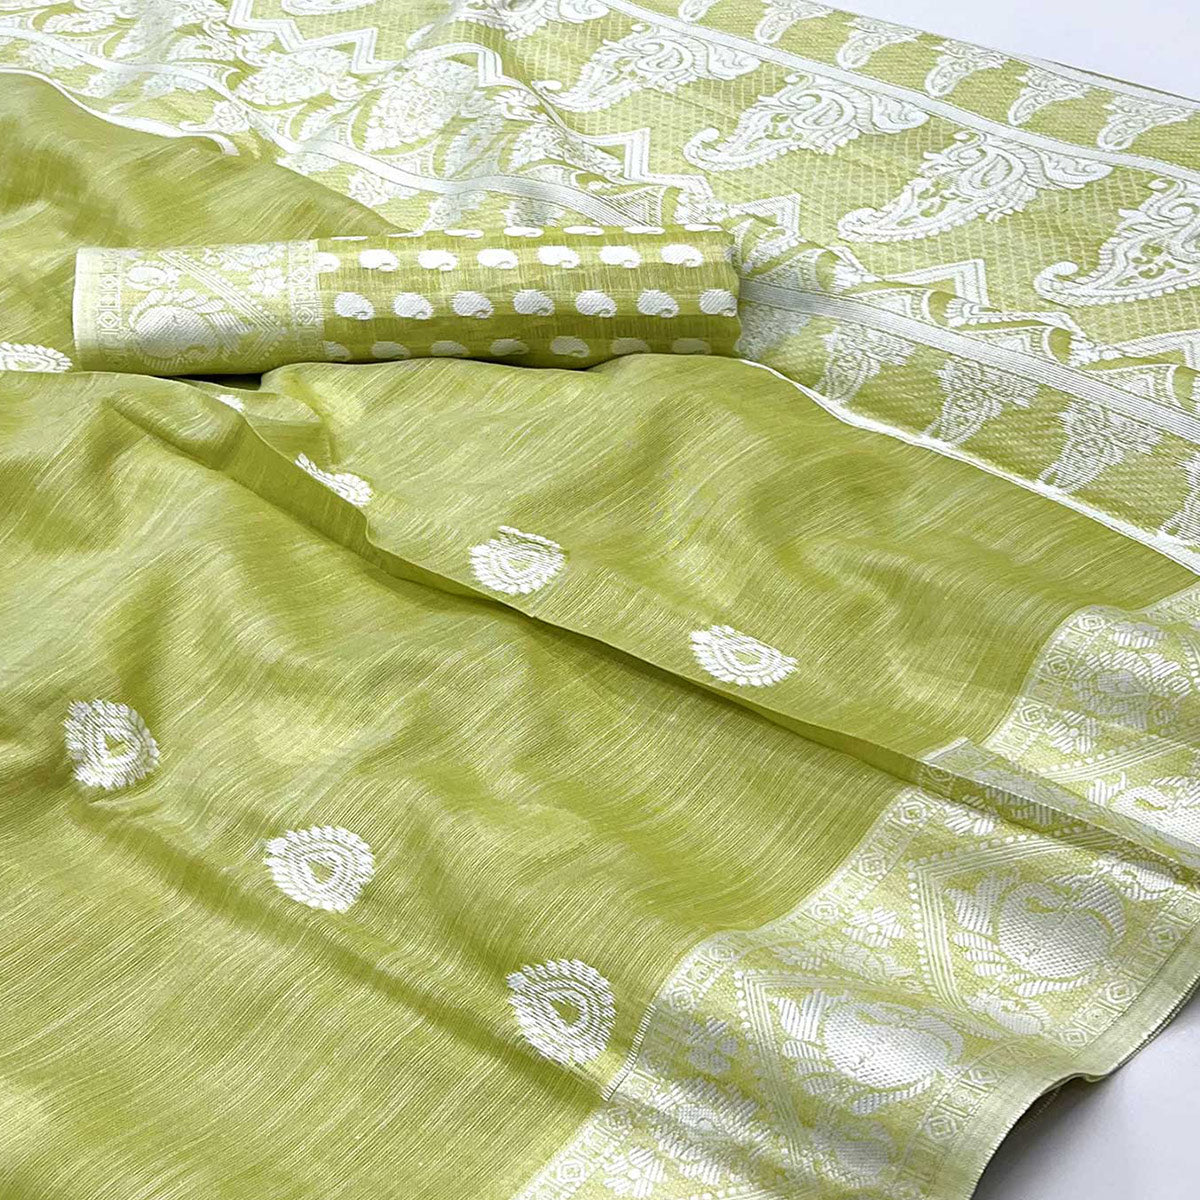 Pista Green Woven Linen Saree